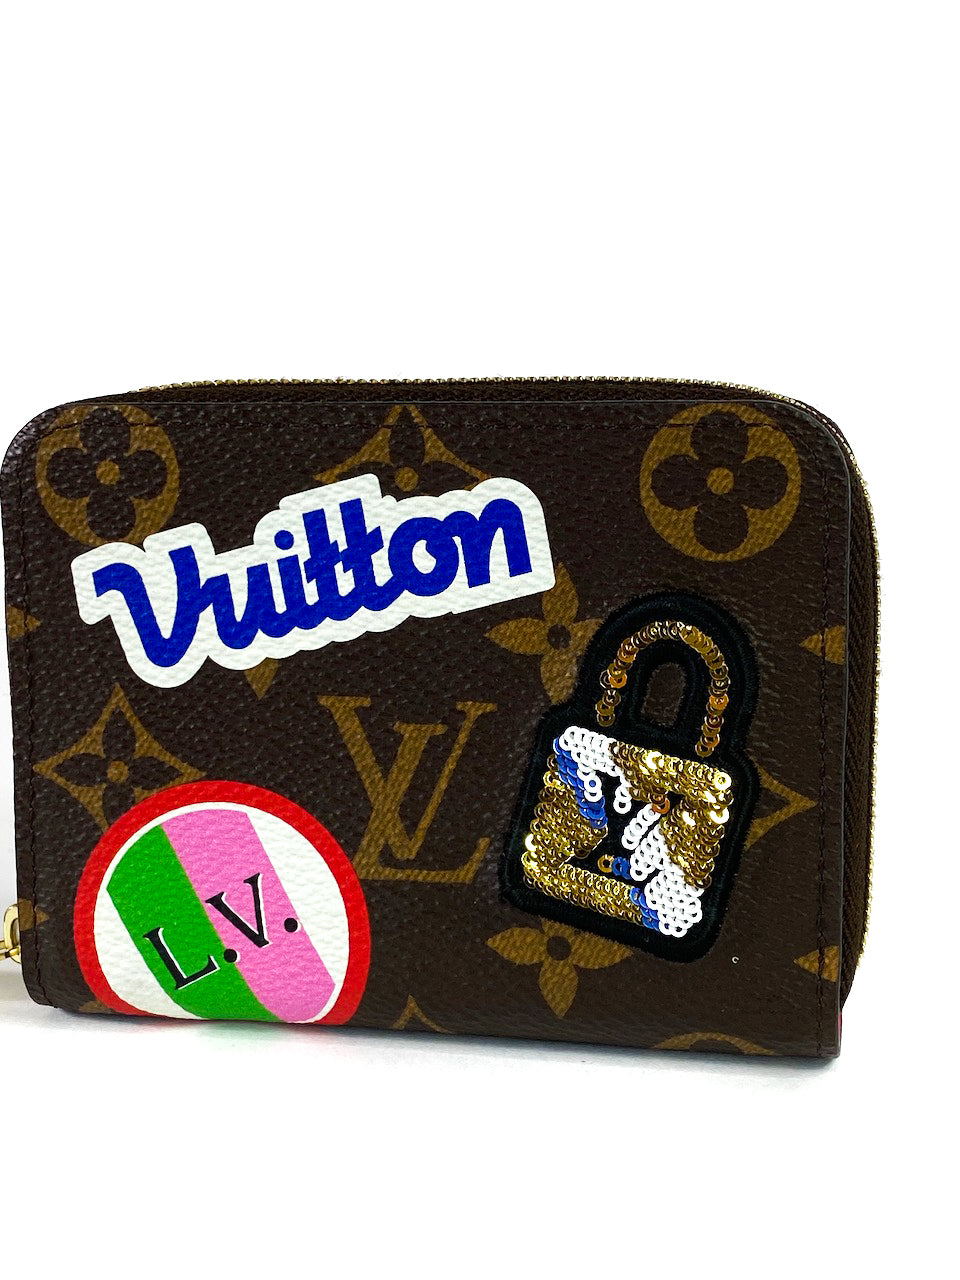 Louis Vuitton Monogram Mini Zip Purse - As Seen on Instagram Live 12/07/20 - Siopaella Designer Exchange